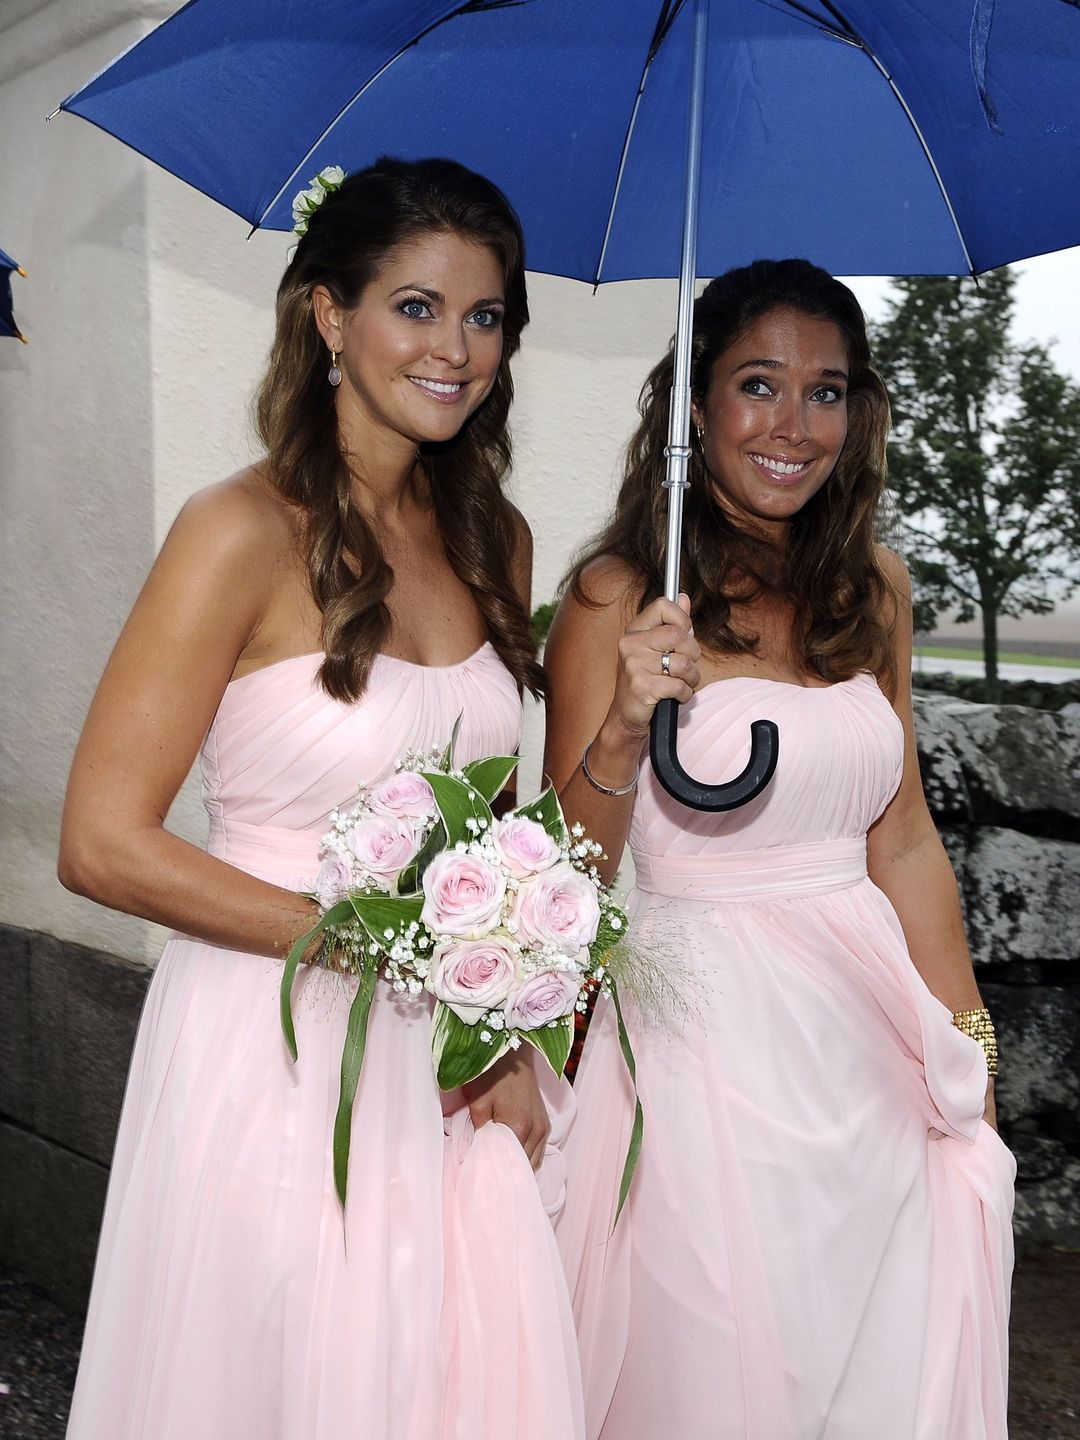 Princess Madeleine and Louise Gottlieb underneath an umbrella in bridesmaid dresses